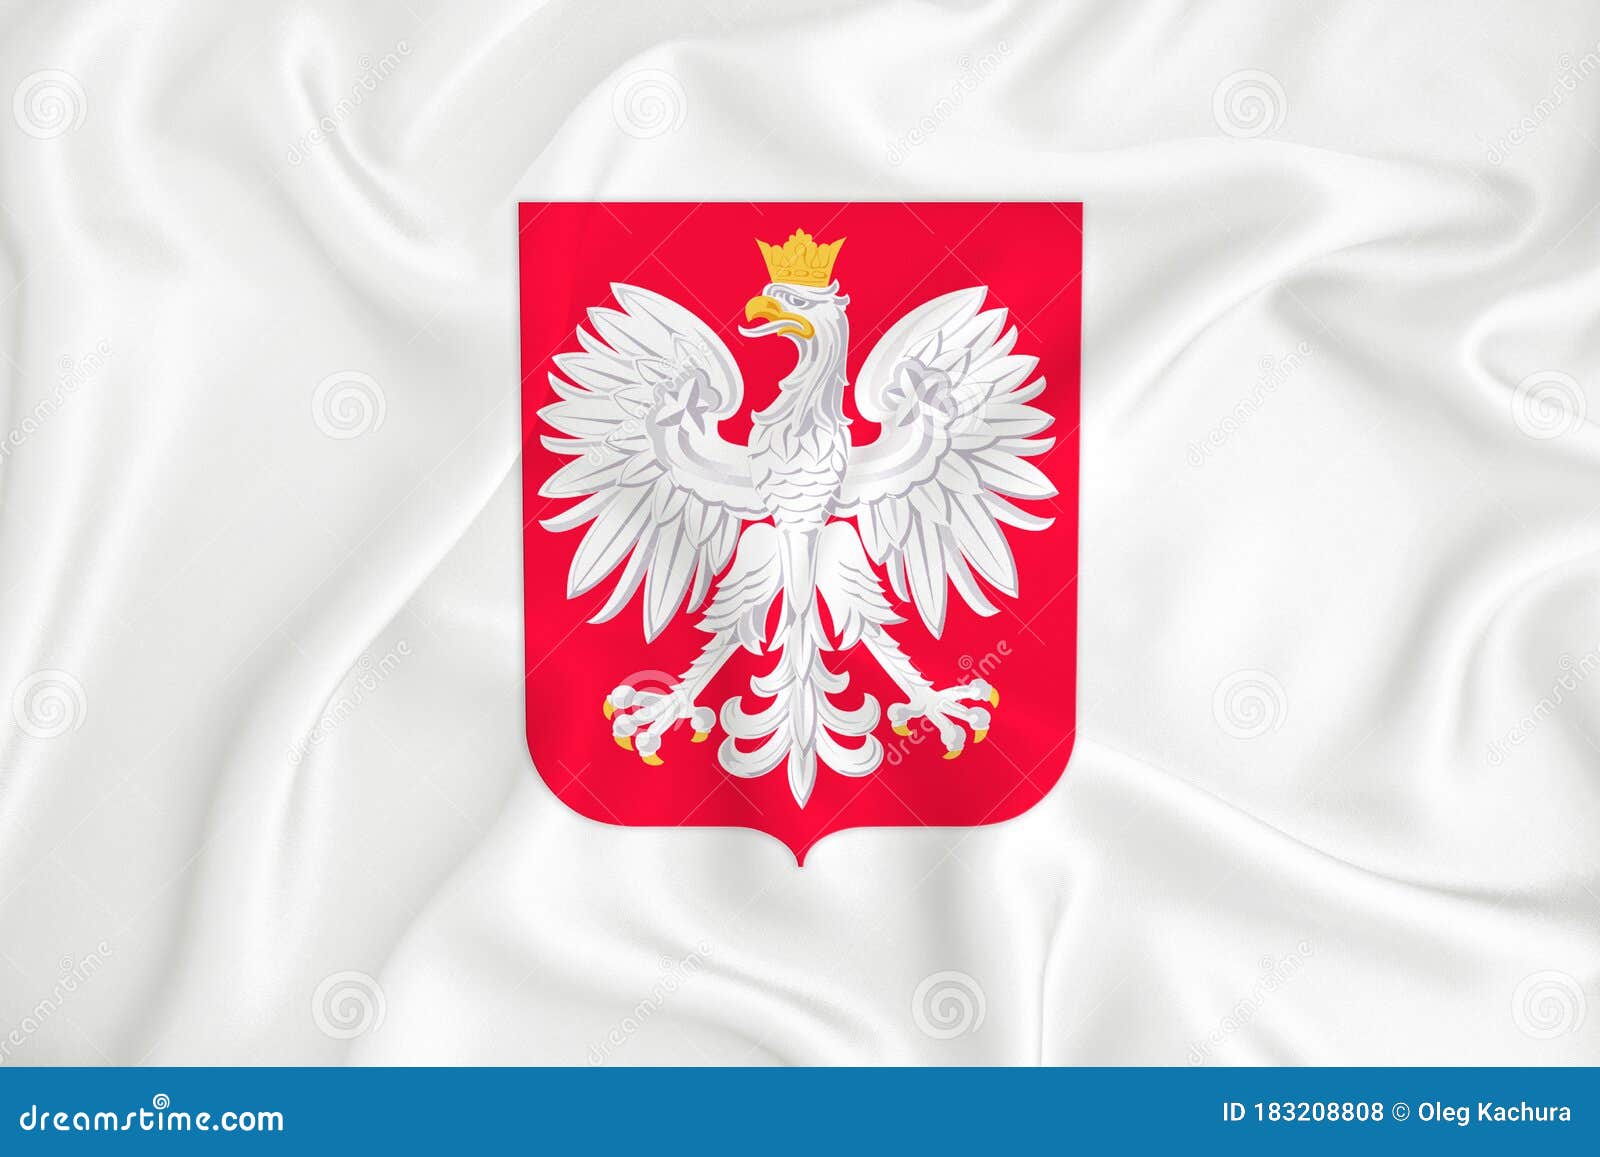 Ansøgning Trivial bodsøvelser A Developing White Flag with the Coat of Arms of Polski. Country Symbol.  Illustration Stock Photo - Image of political, national: 183208808